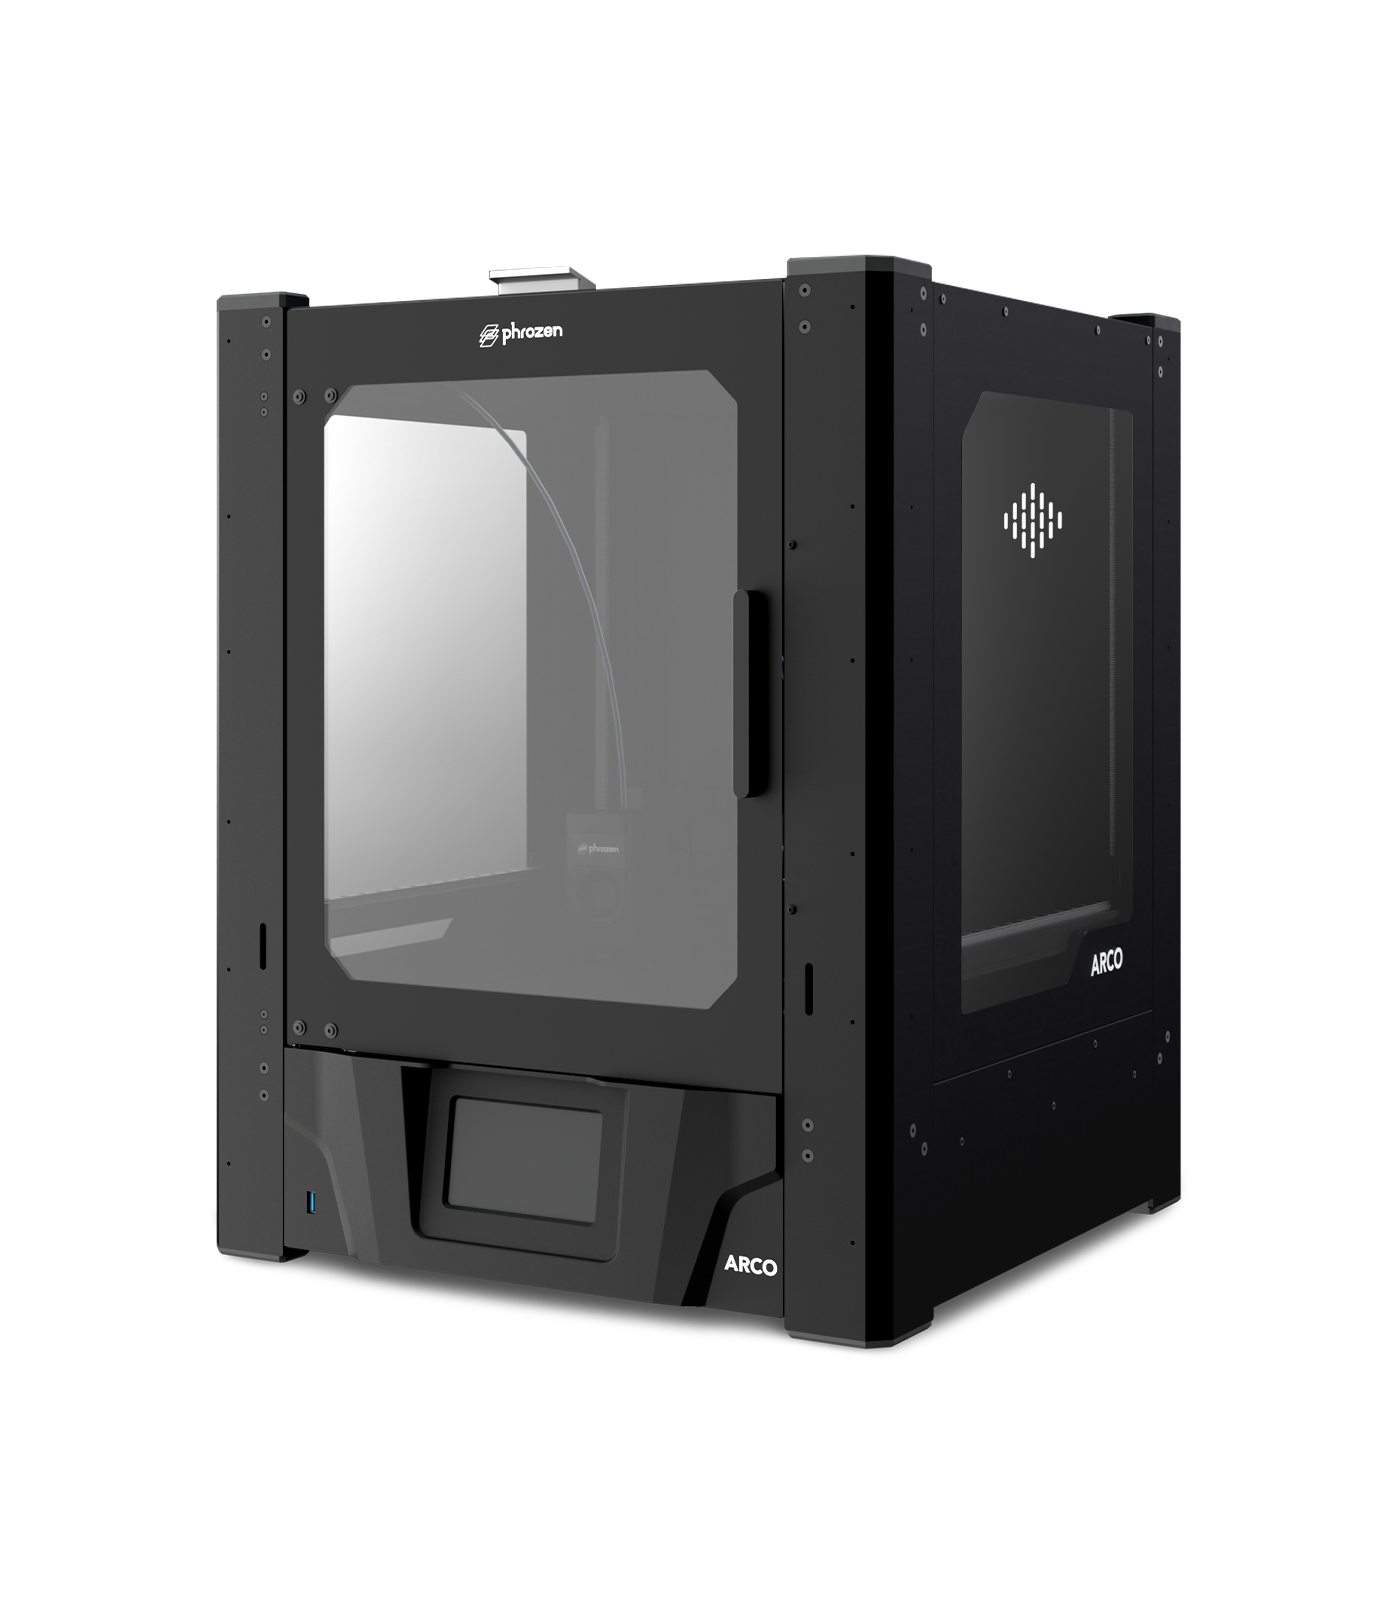 Phrozen PentaShield FDM 3D Printer Enclosure